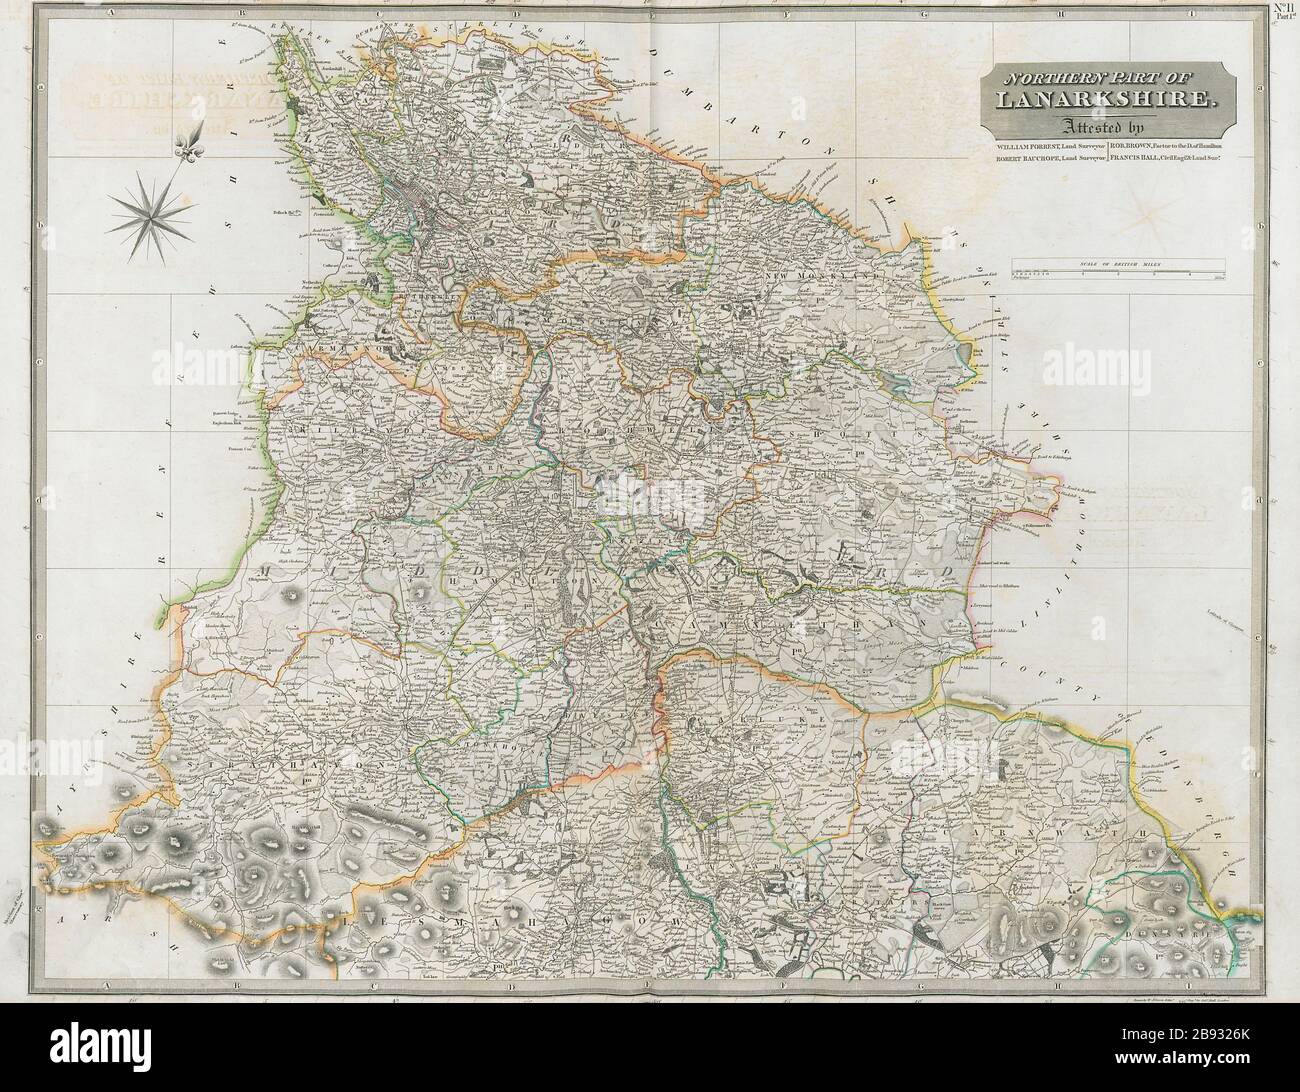 Lanarkshire nord. Airdrie Motherwell Glasgow East Kilbride. THOMSON 1832 mappa Foto Stock